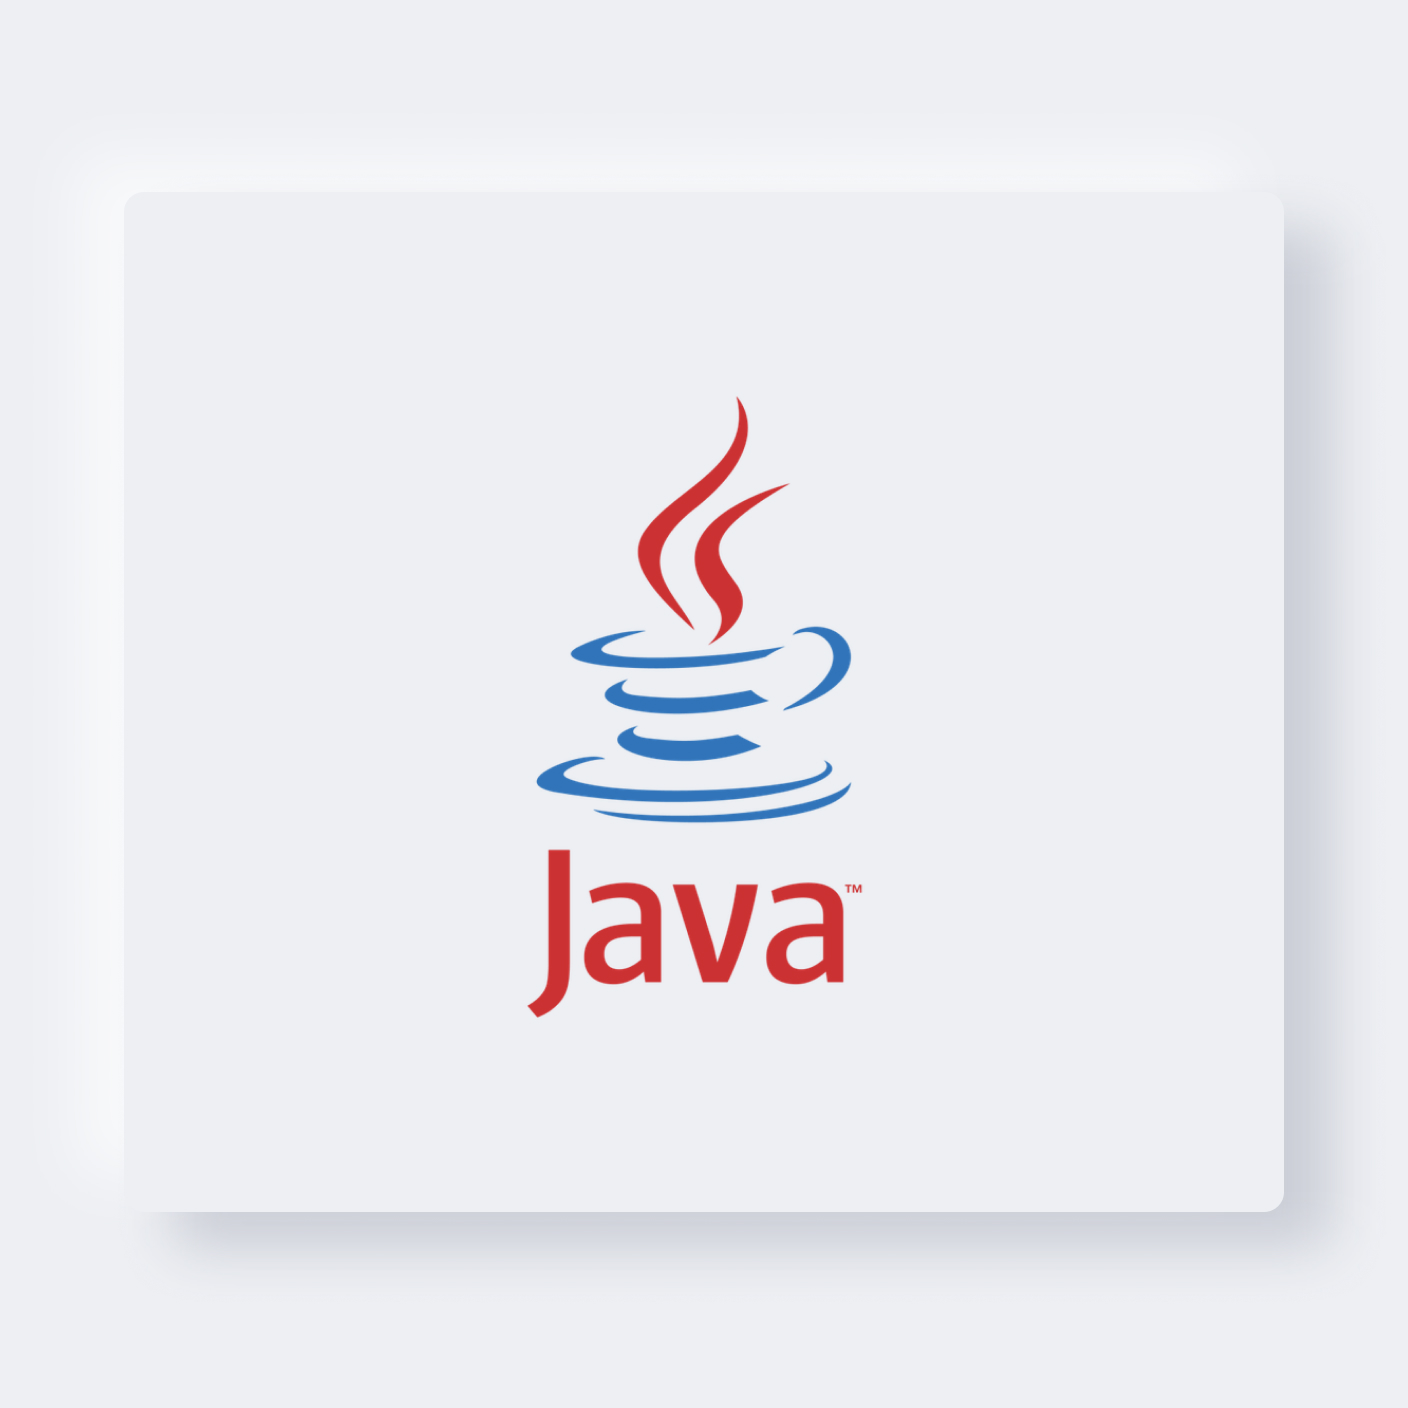 Java - coding language